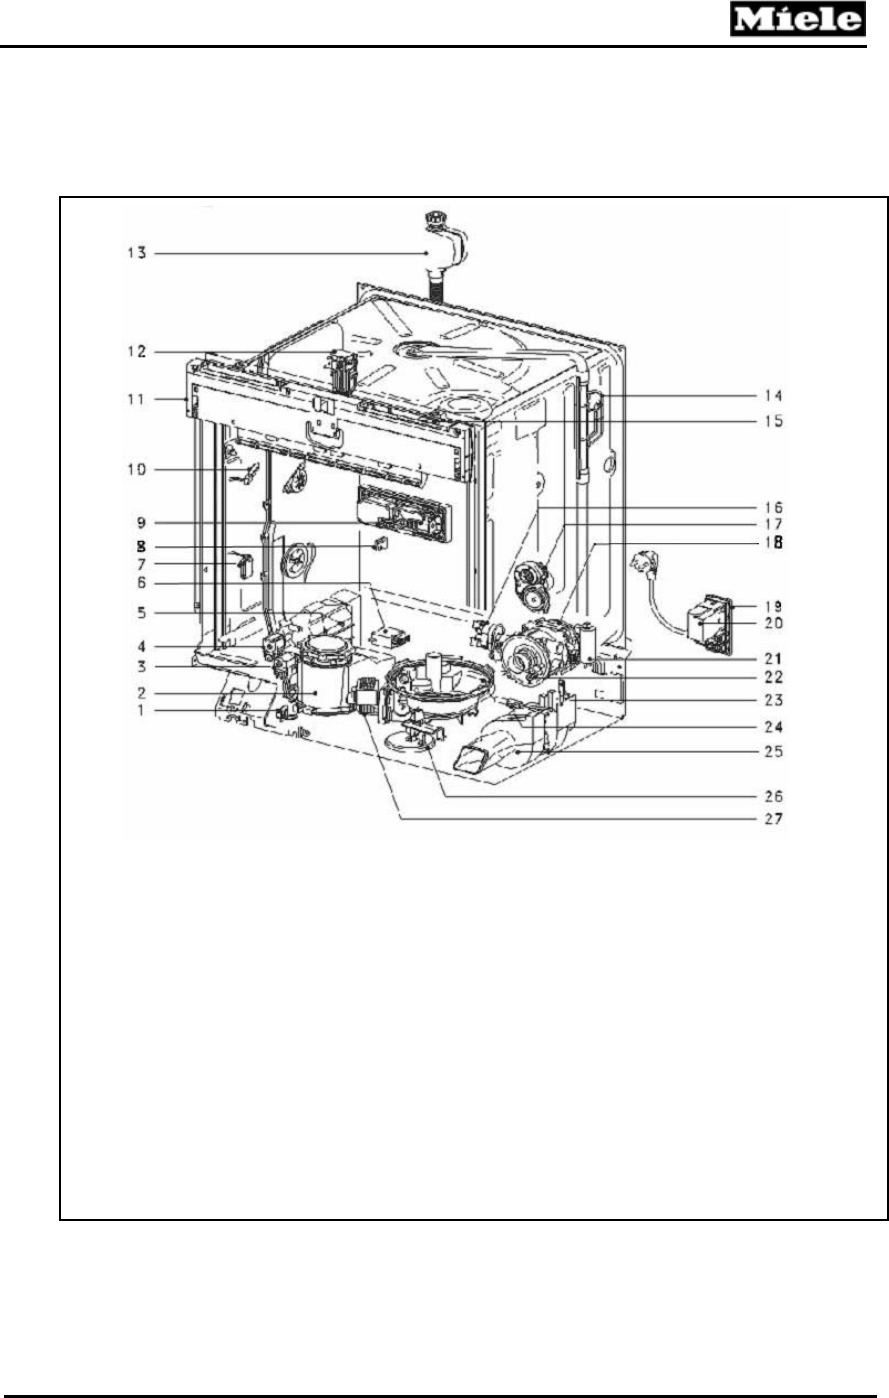 1 Miele G1000 G2000 Dishwasher Dec 06  Miele B3 4 Water Flow Meter Wiring Diagram    UserManual.wiki